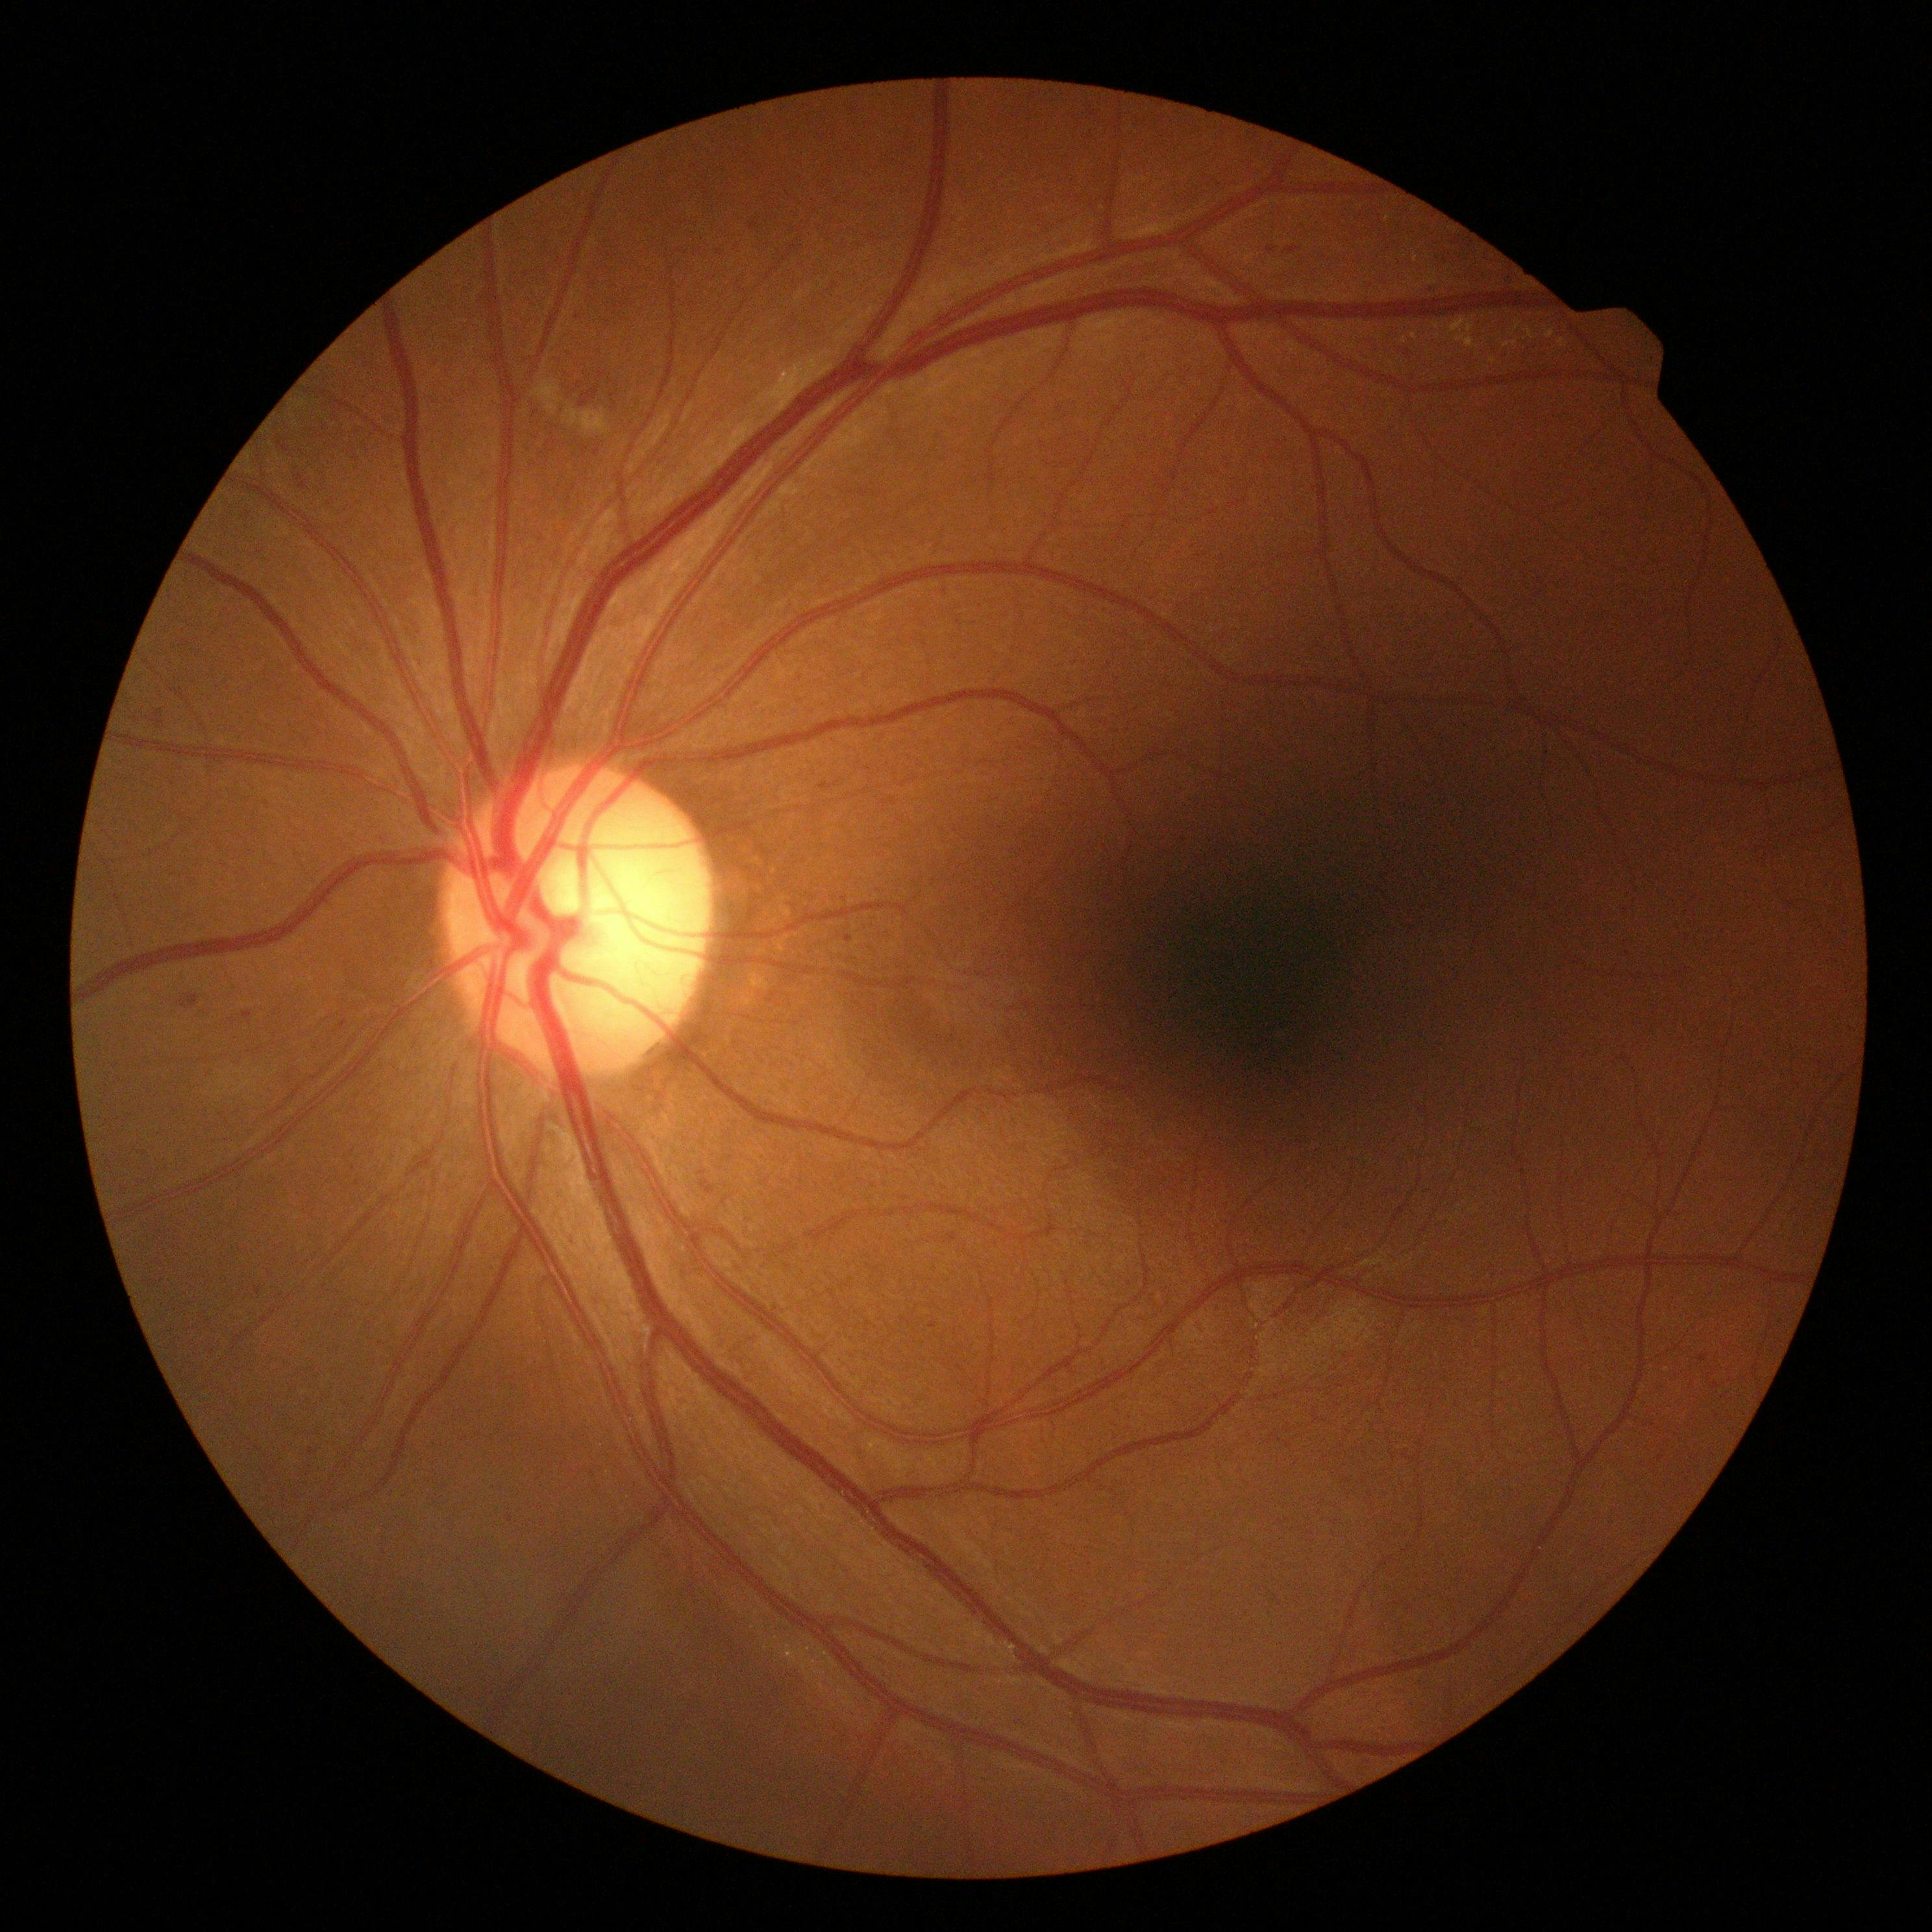 eye scan showng macular oedema